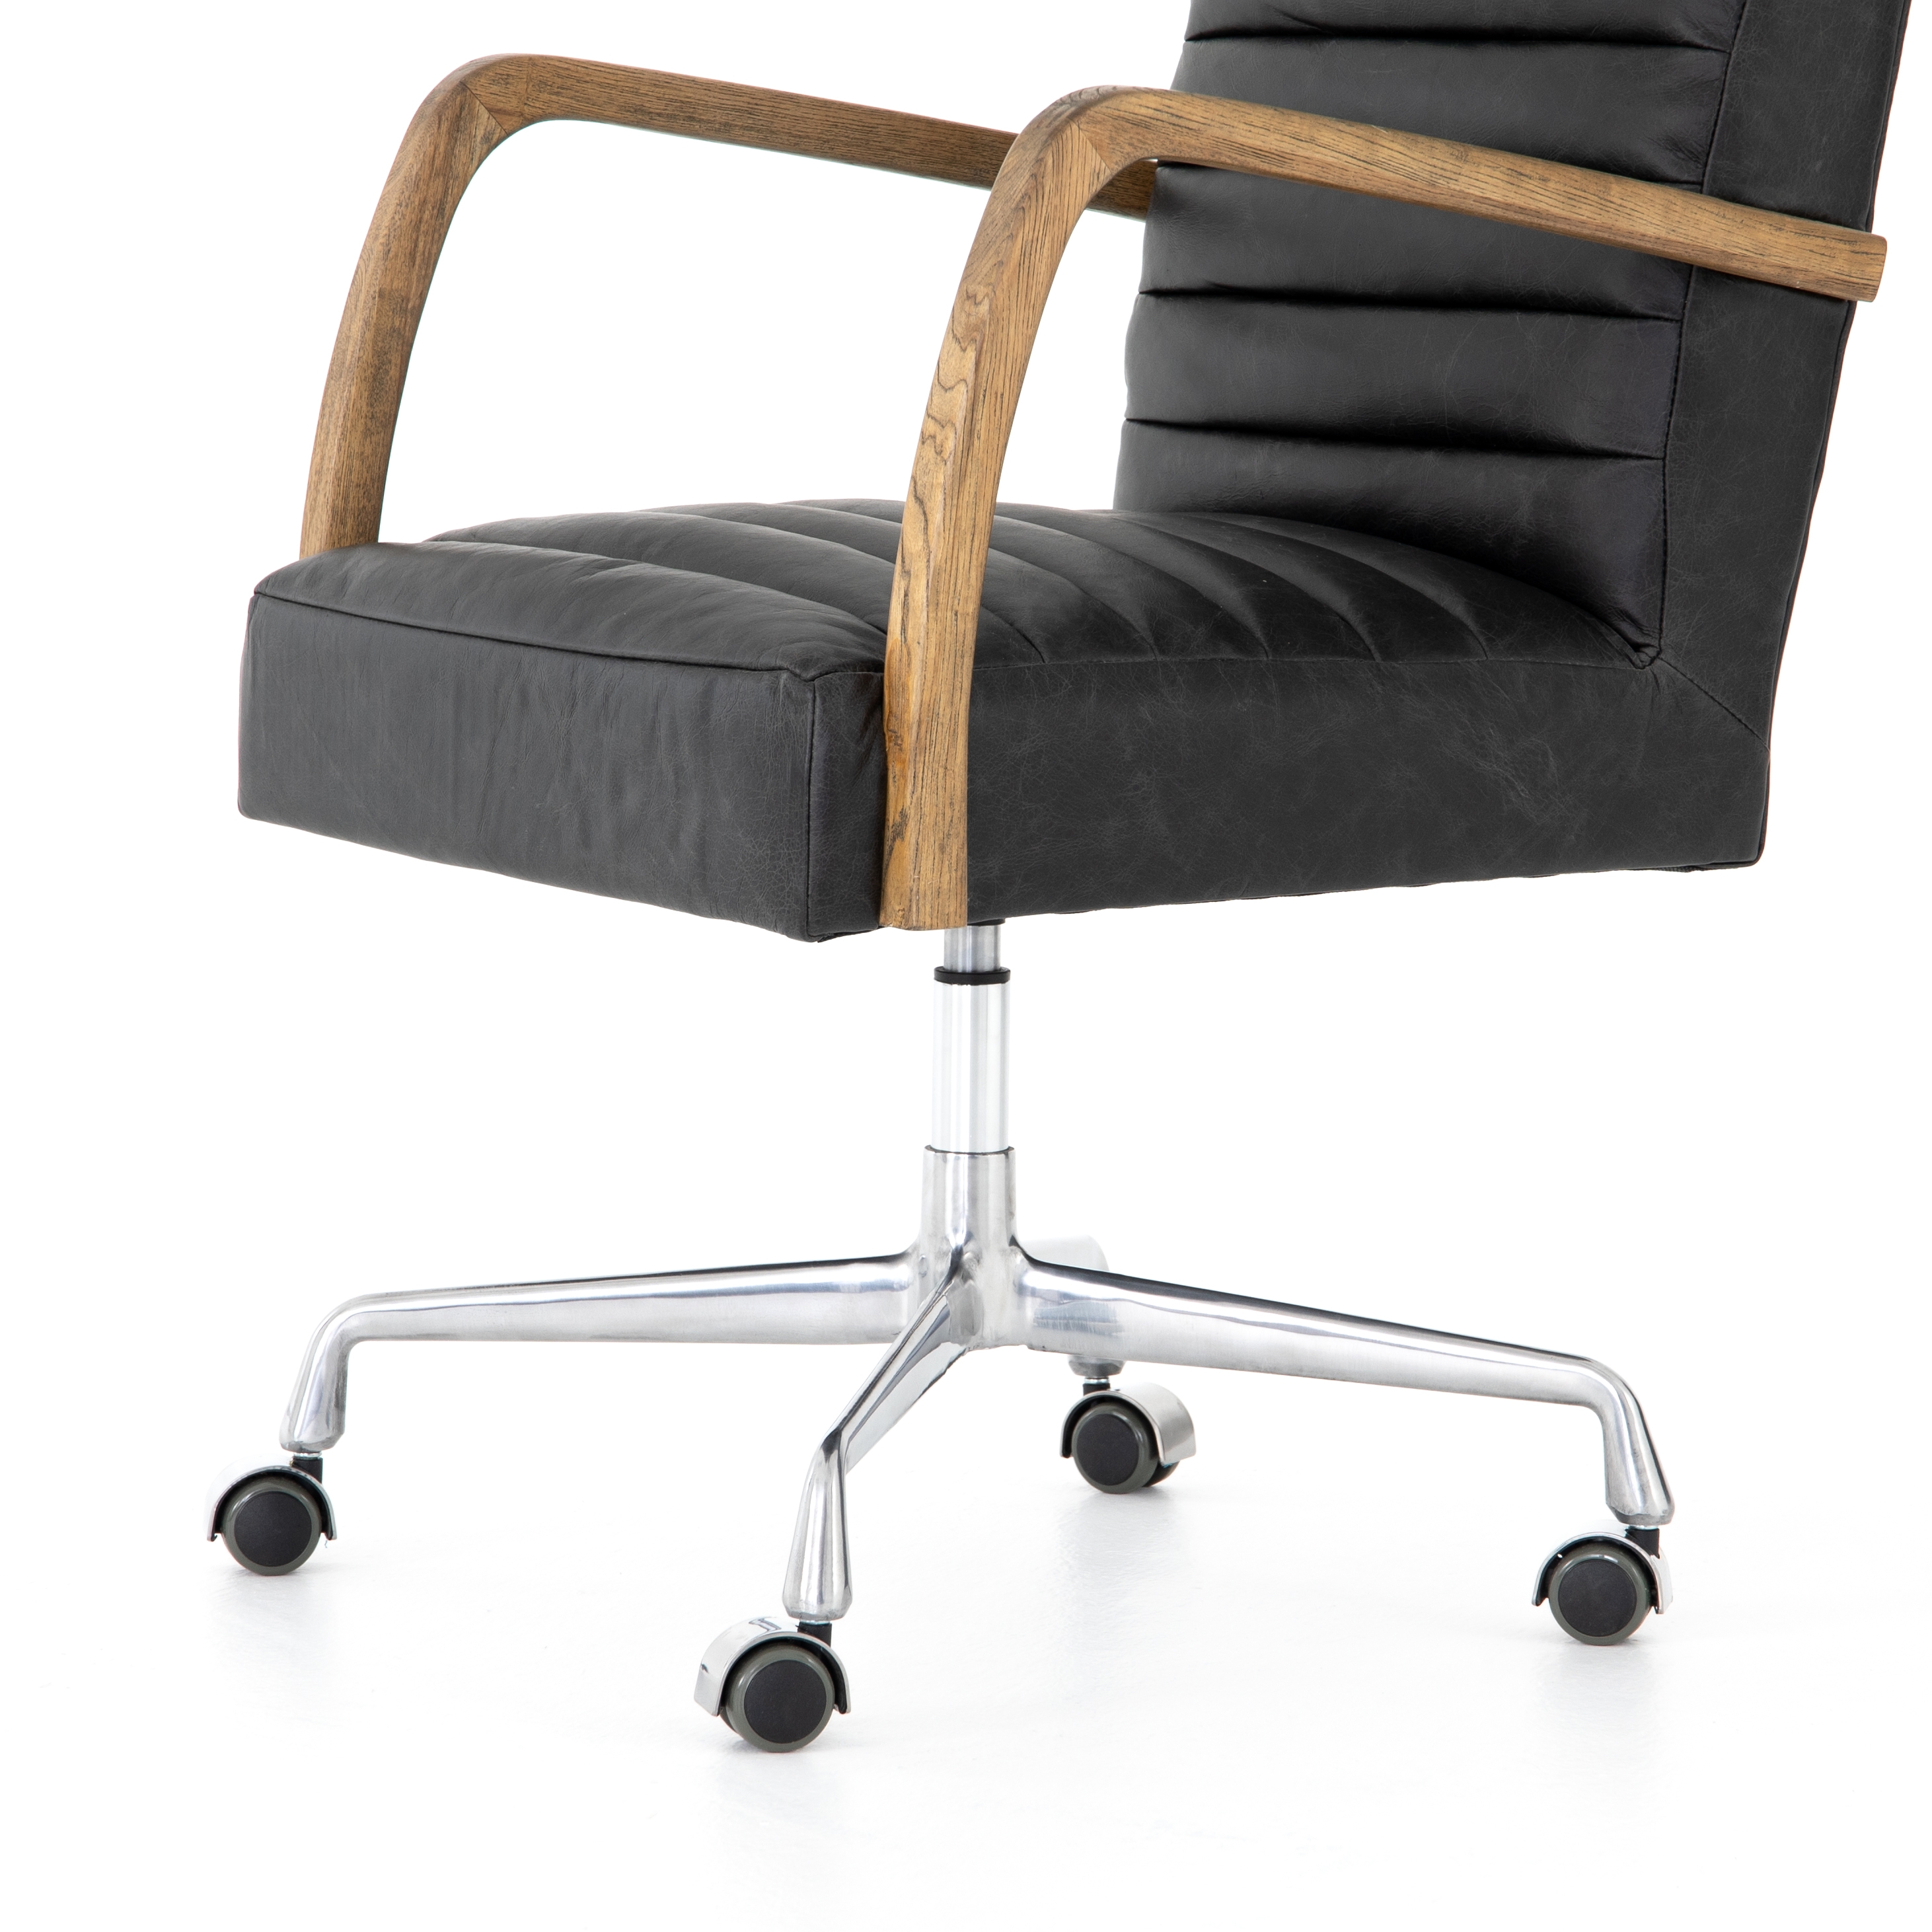 Bryson Channeled Desk Chair-Smoke - Image 1